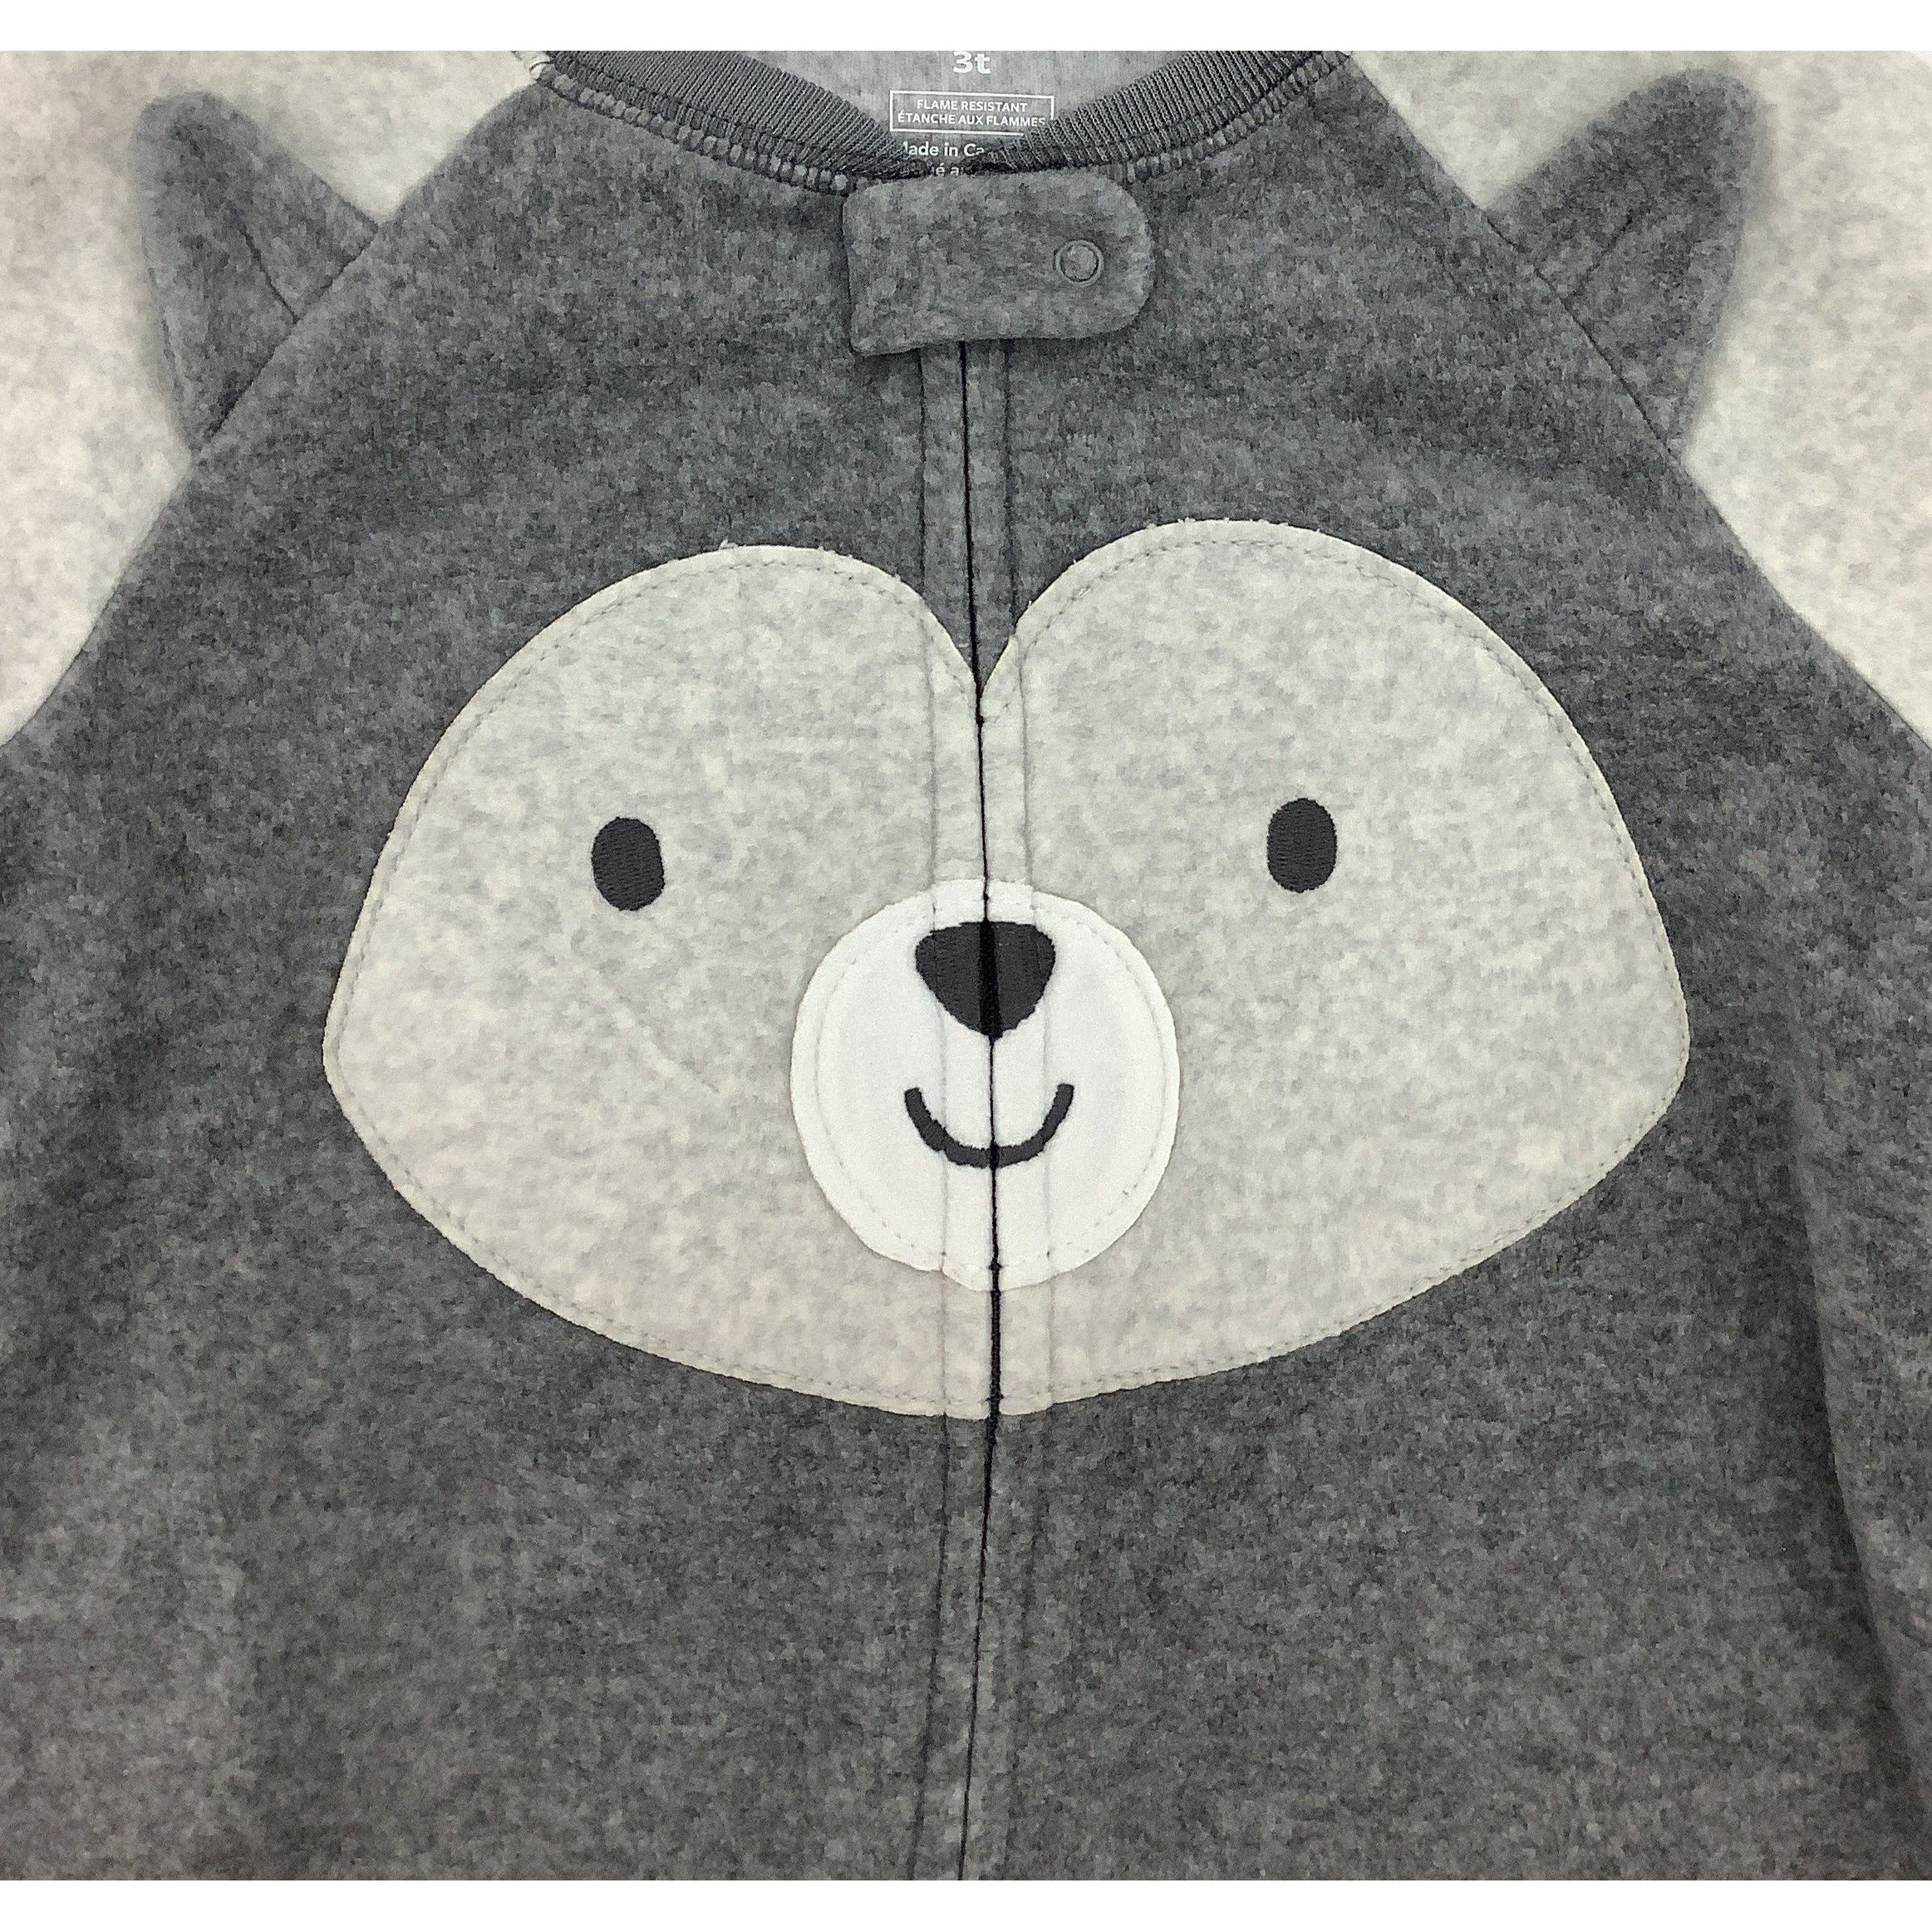 Carter's Toddler Zip Up Fleece Pyjamas / Grey / Bear Theme / Kid's Sleepwear / Various Sizes